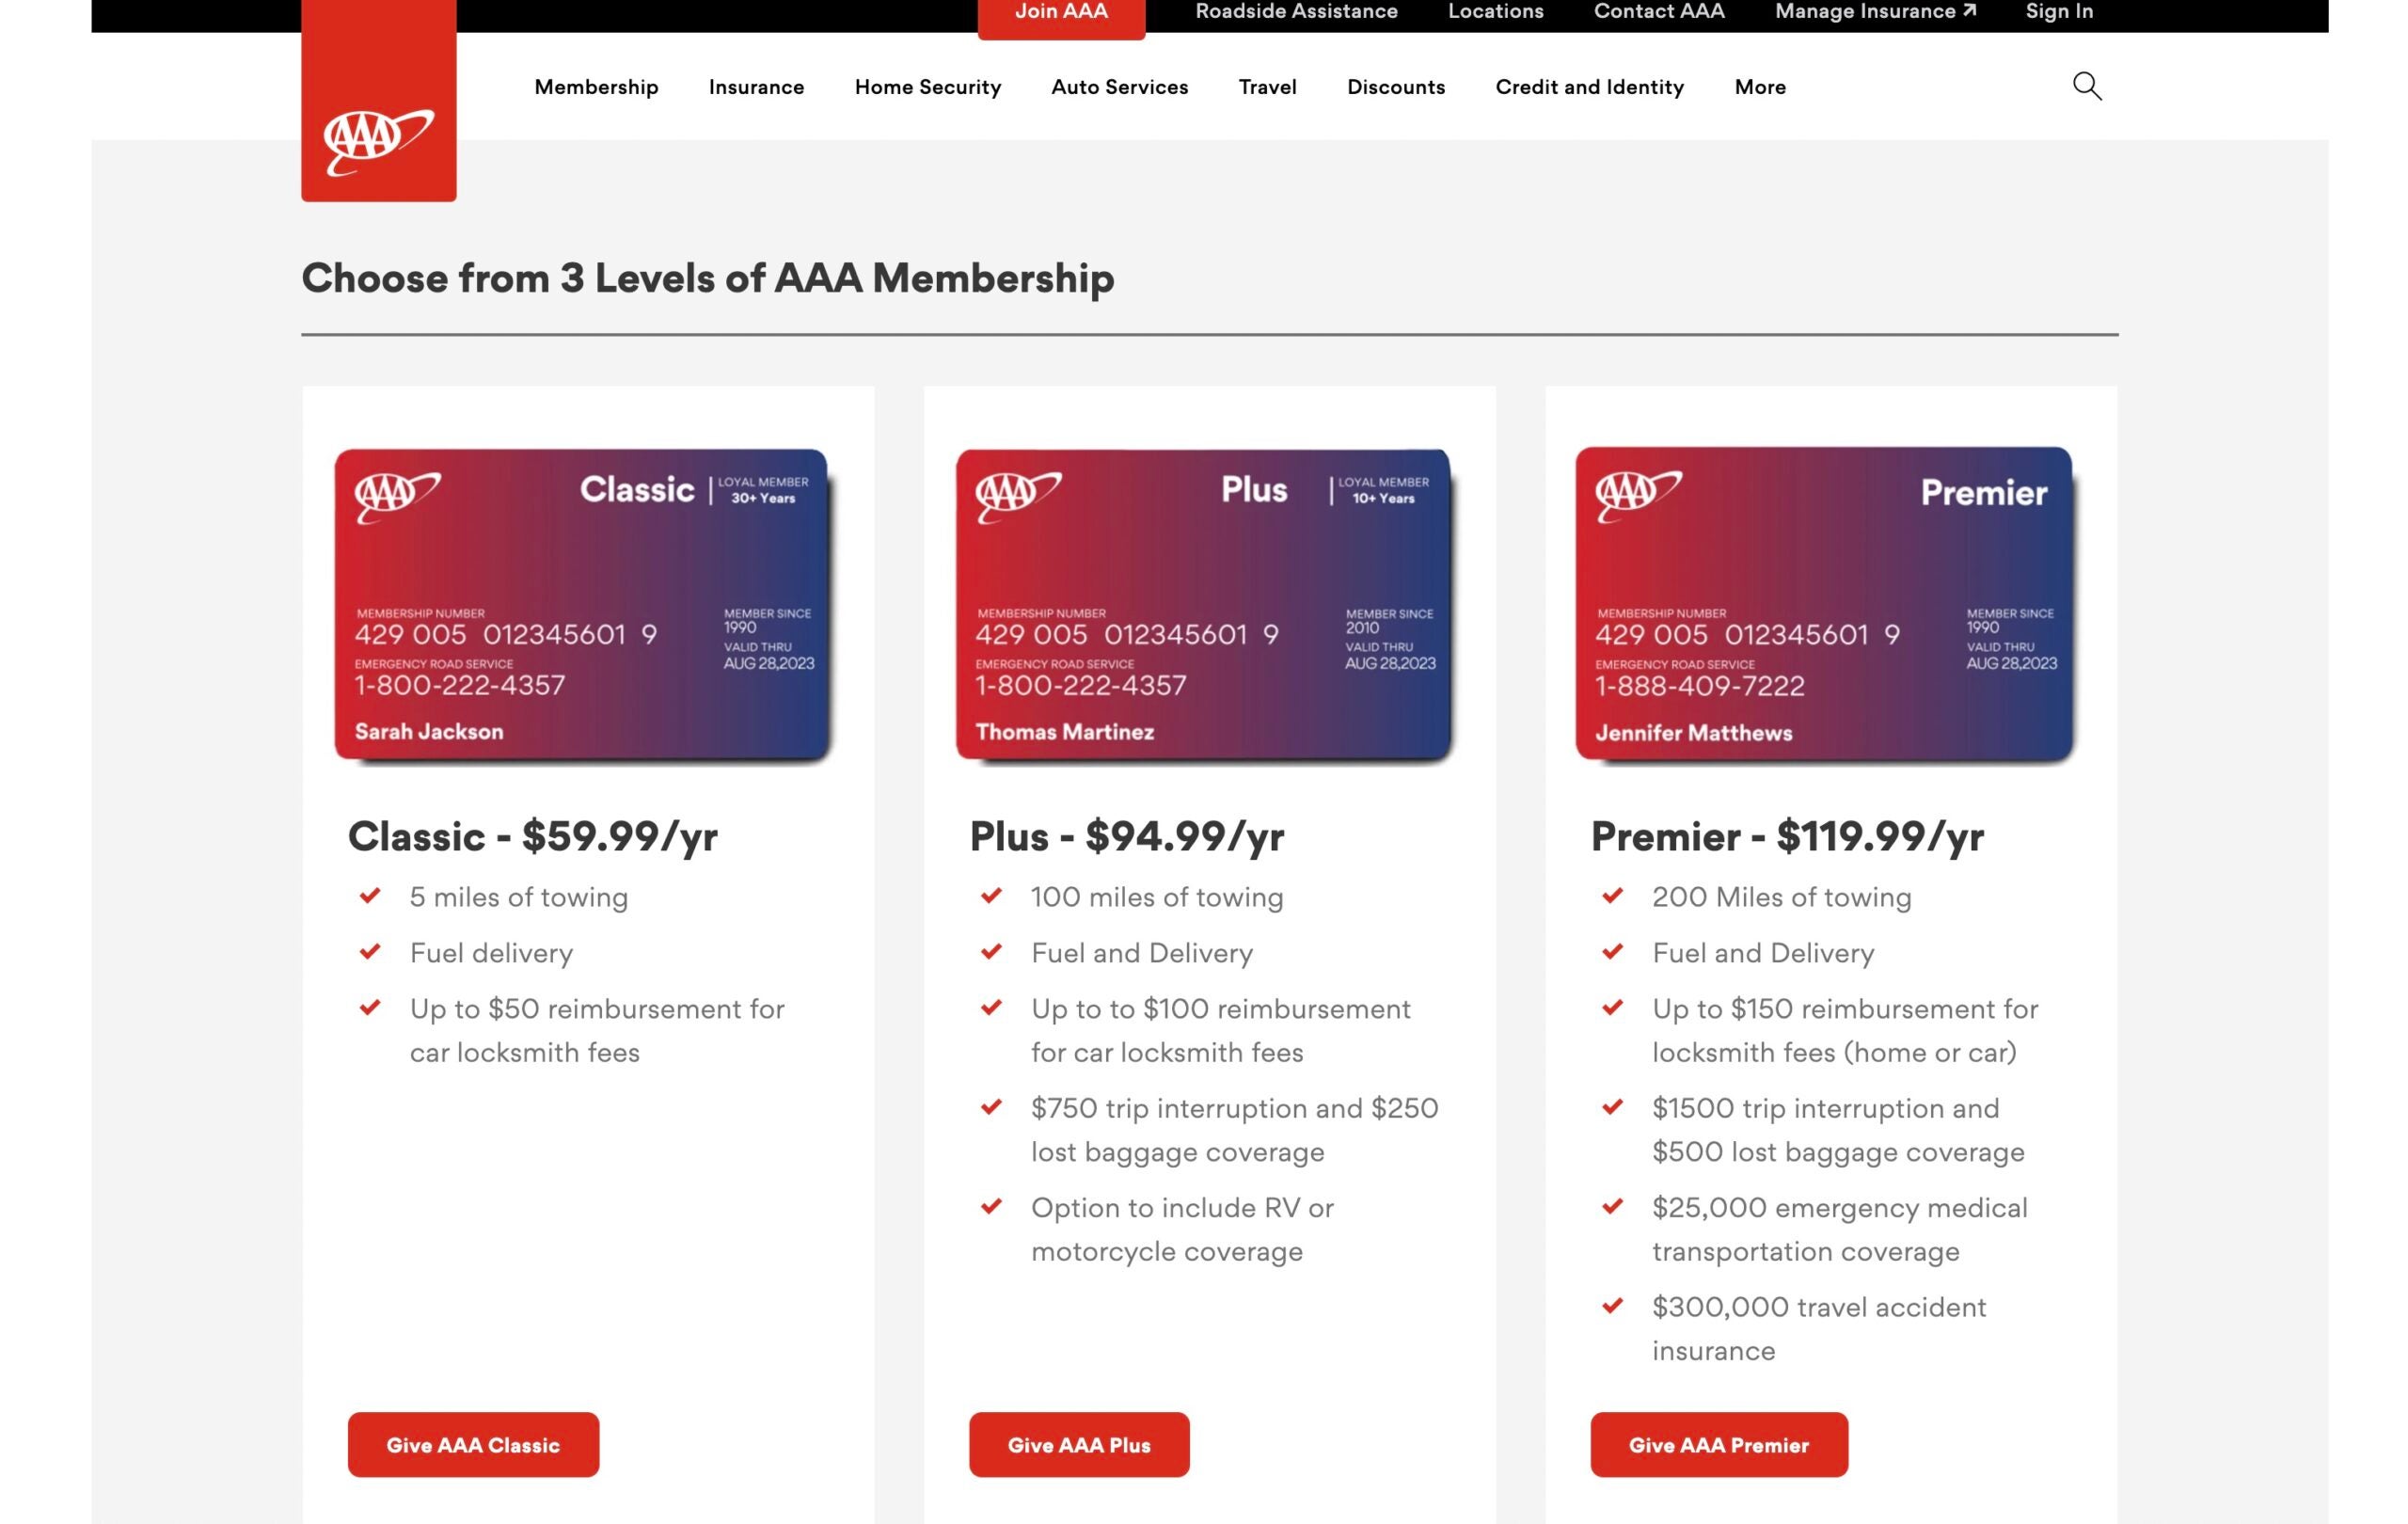 Is AAA membership worth it?